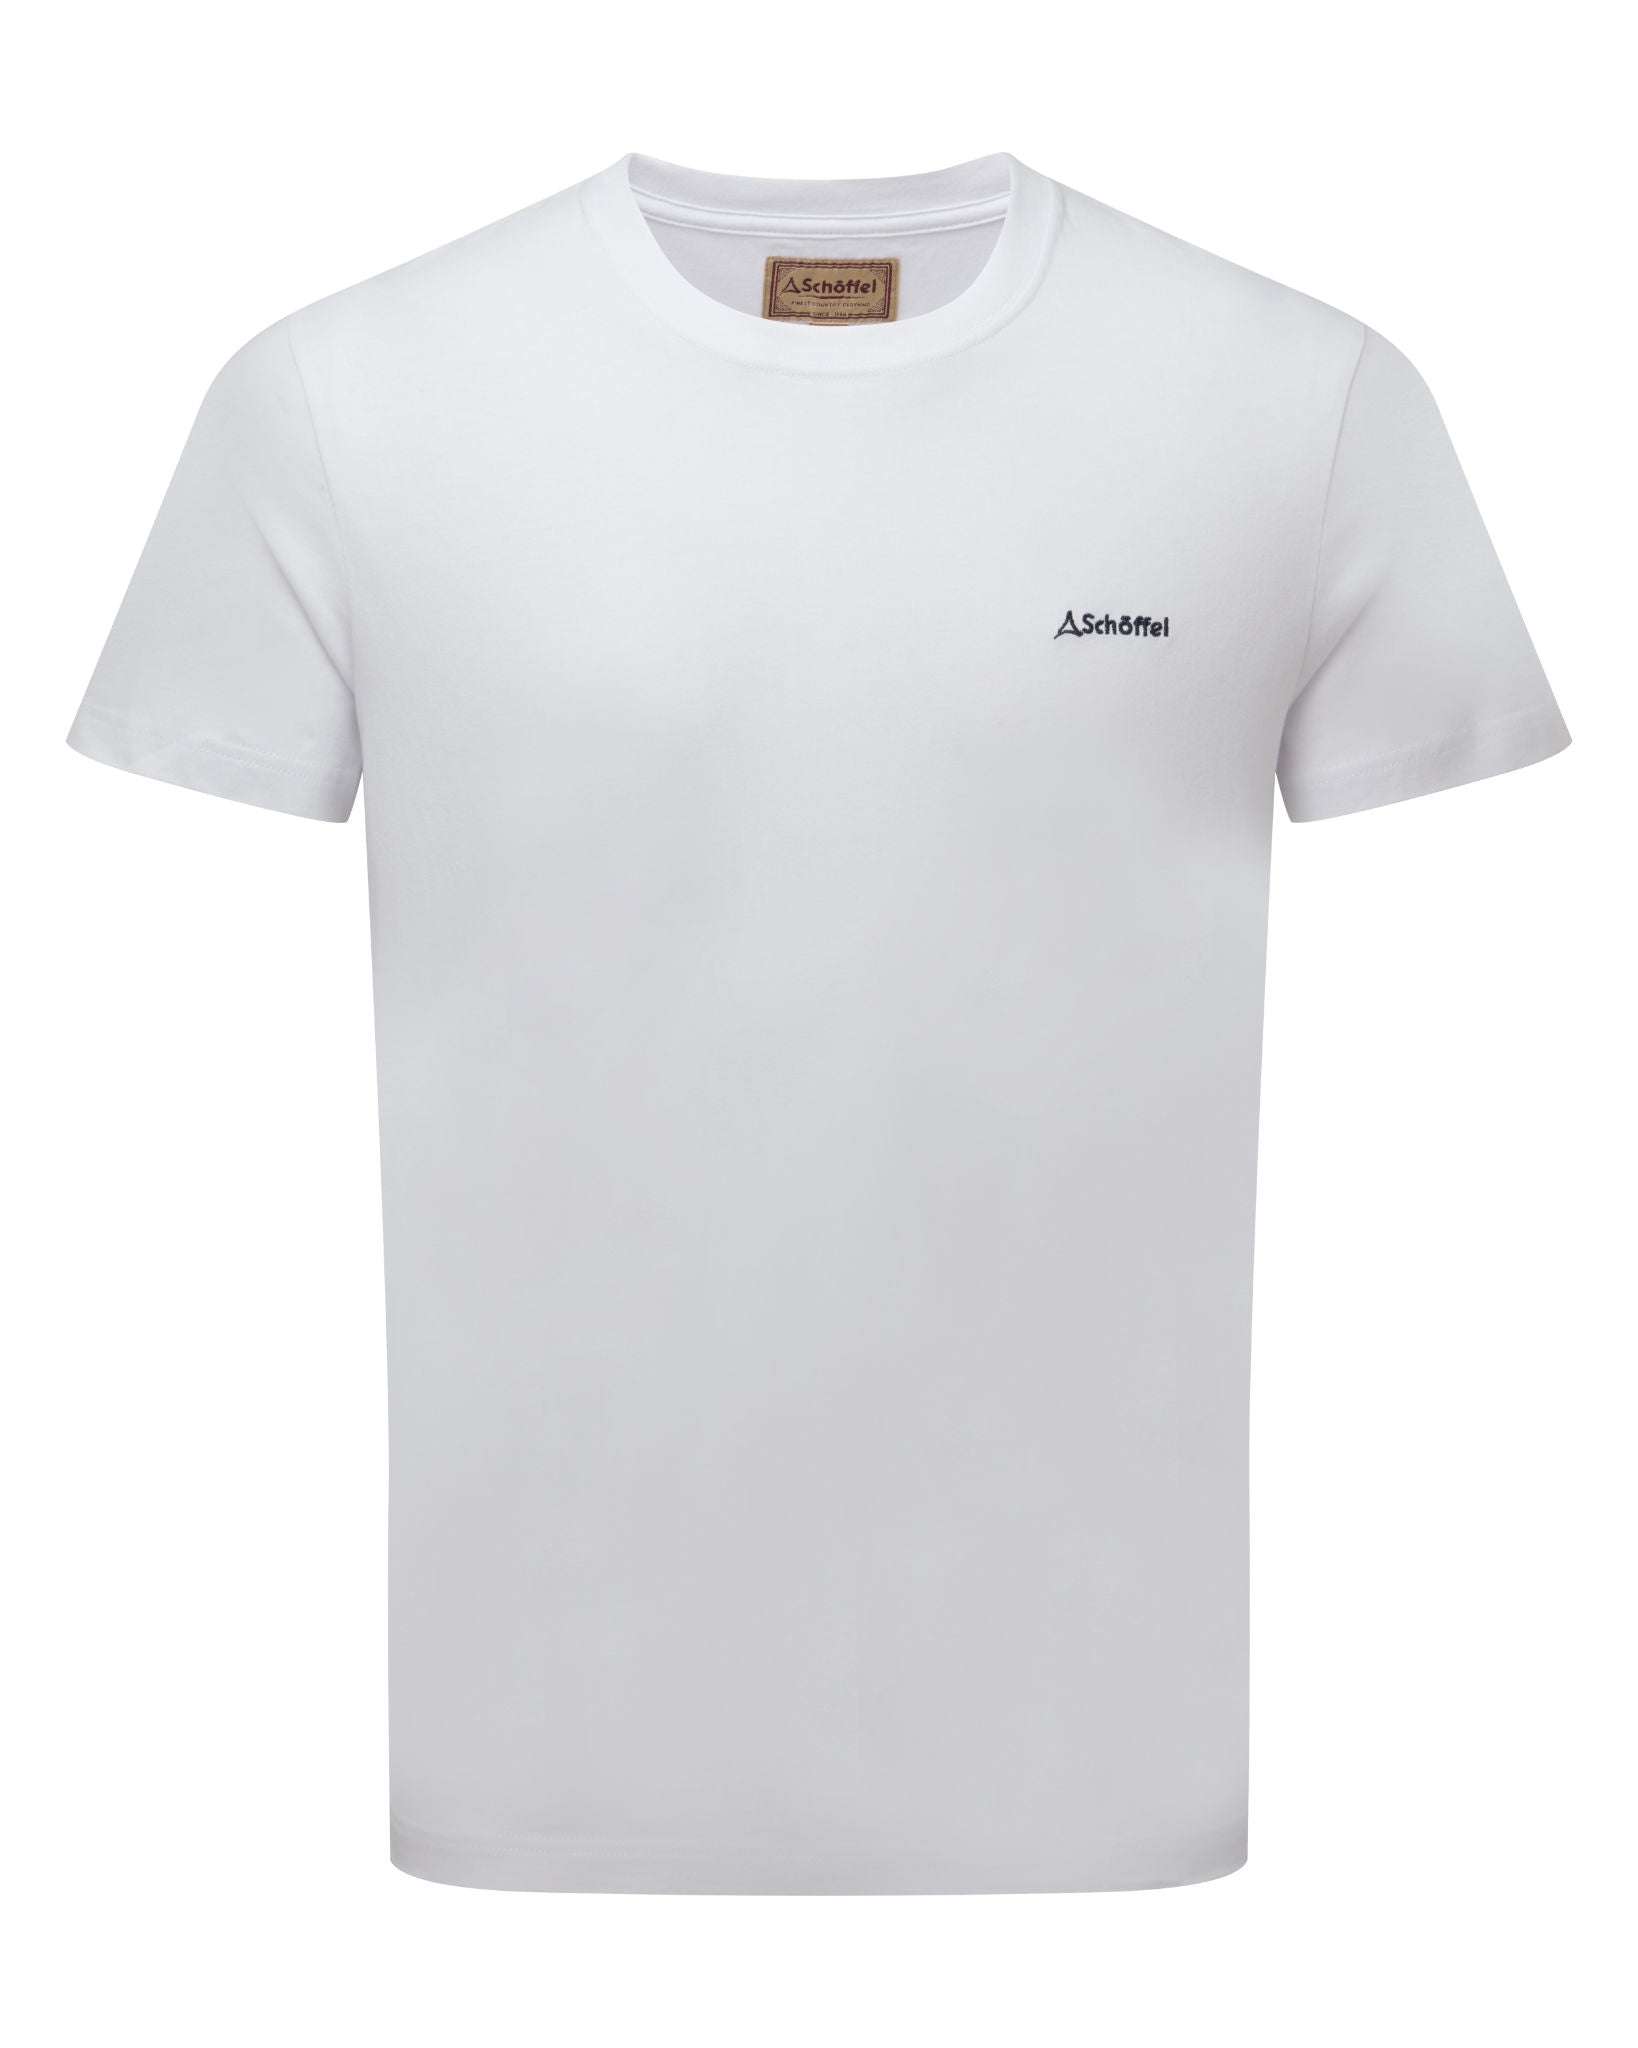 Trevone T-shirt - White